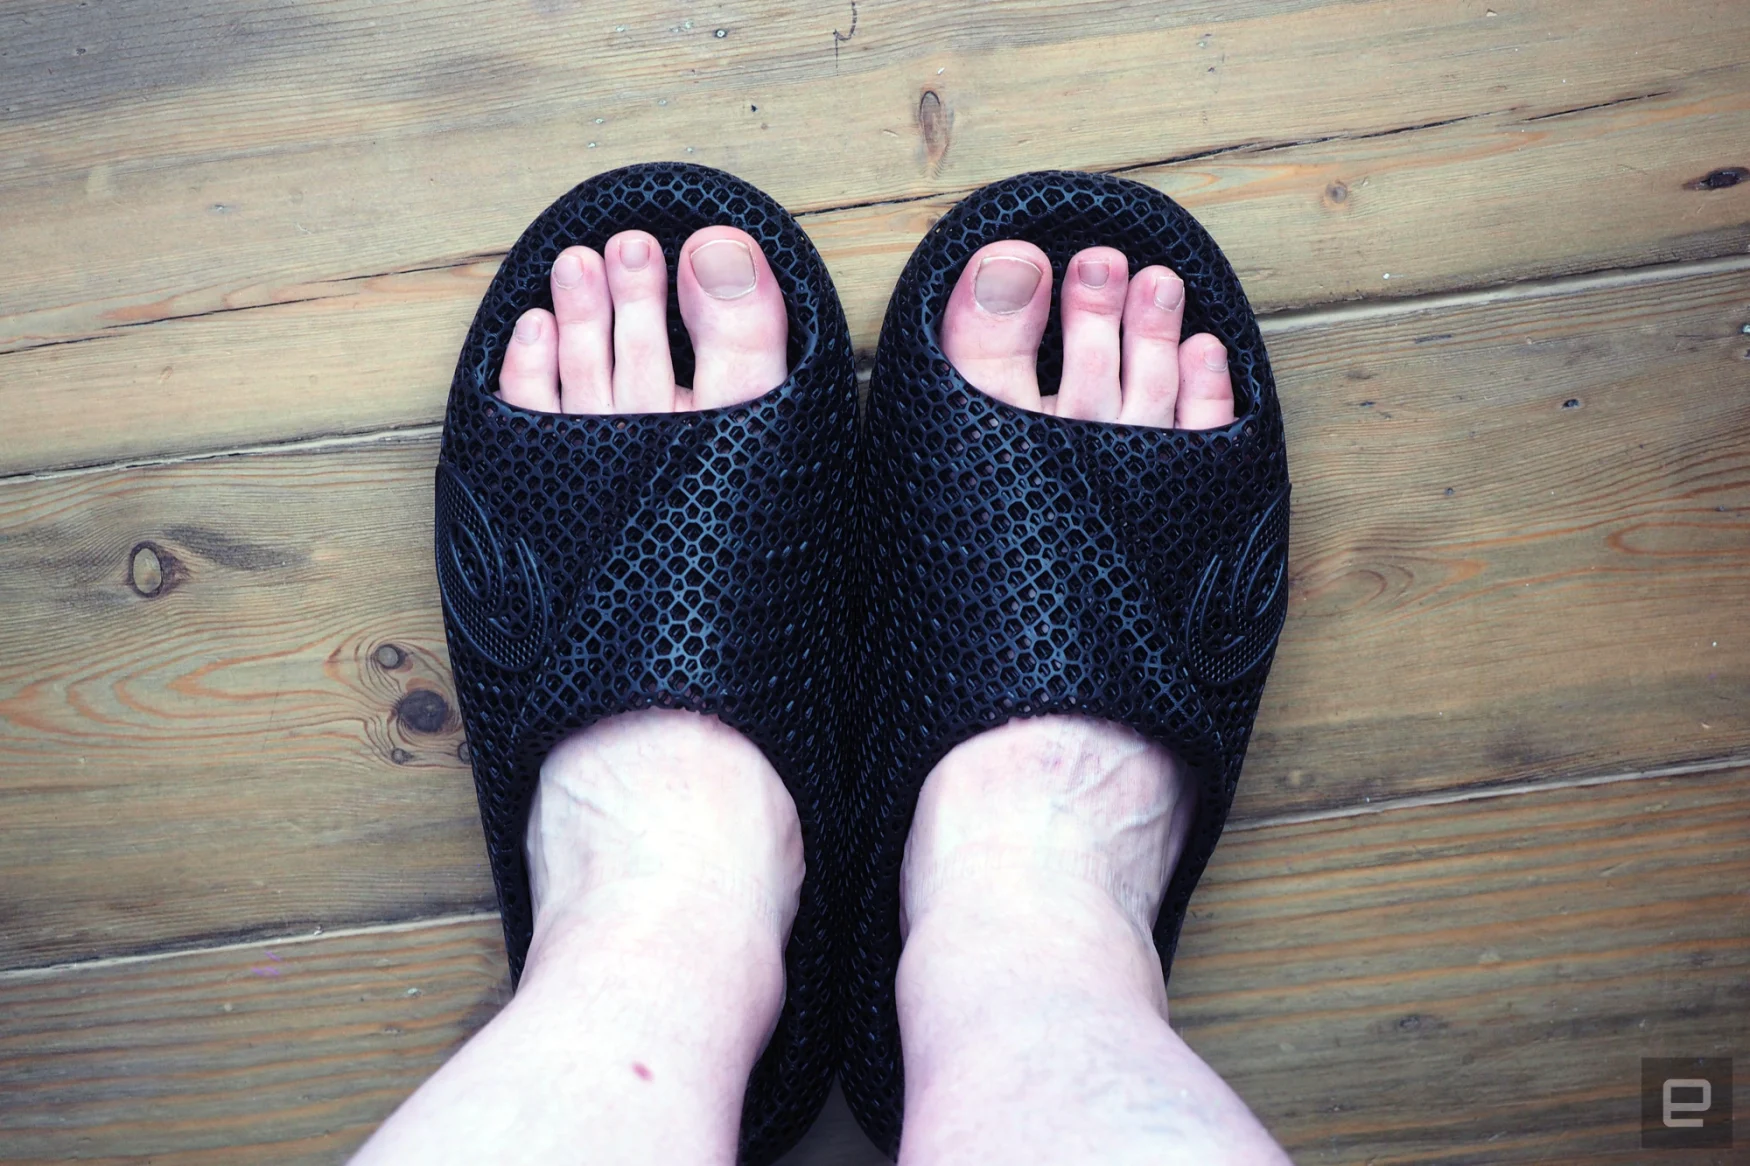 Asics' 3D-printed sandal offers post-workout comfort | Engadget